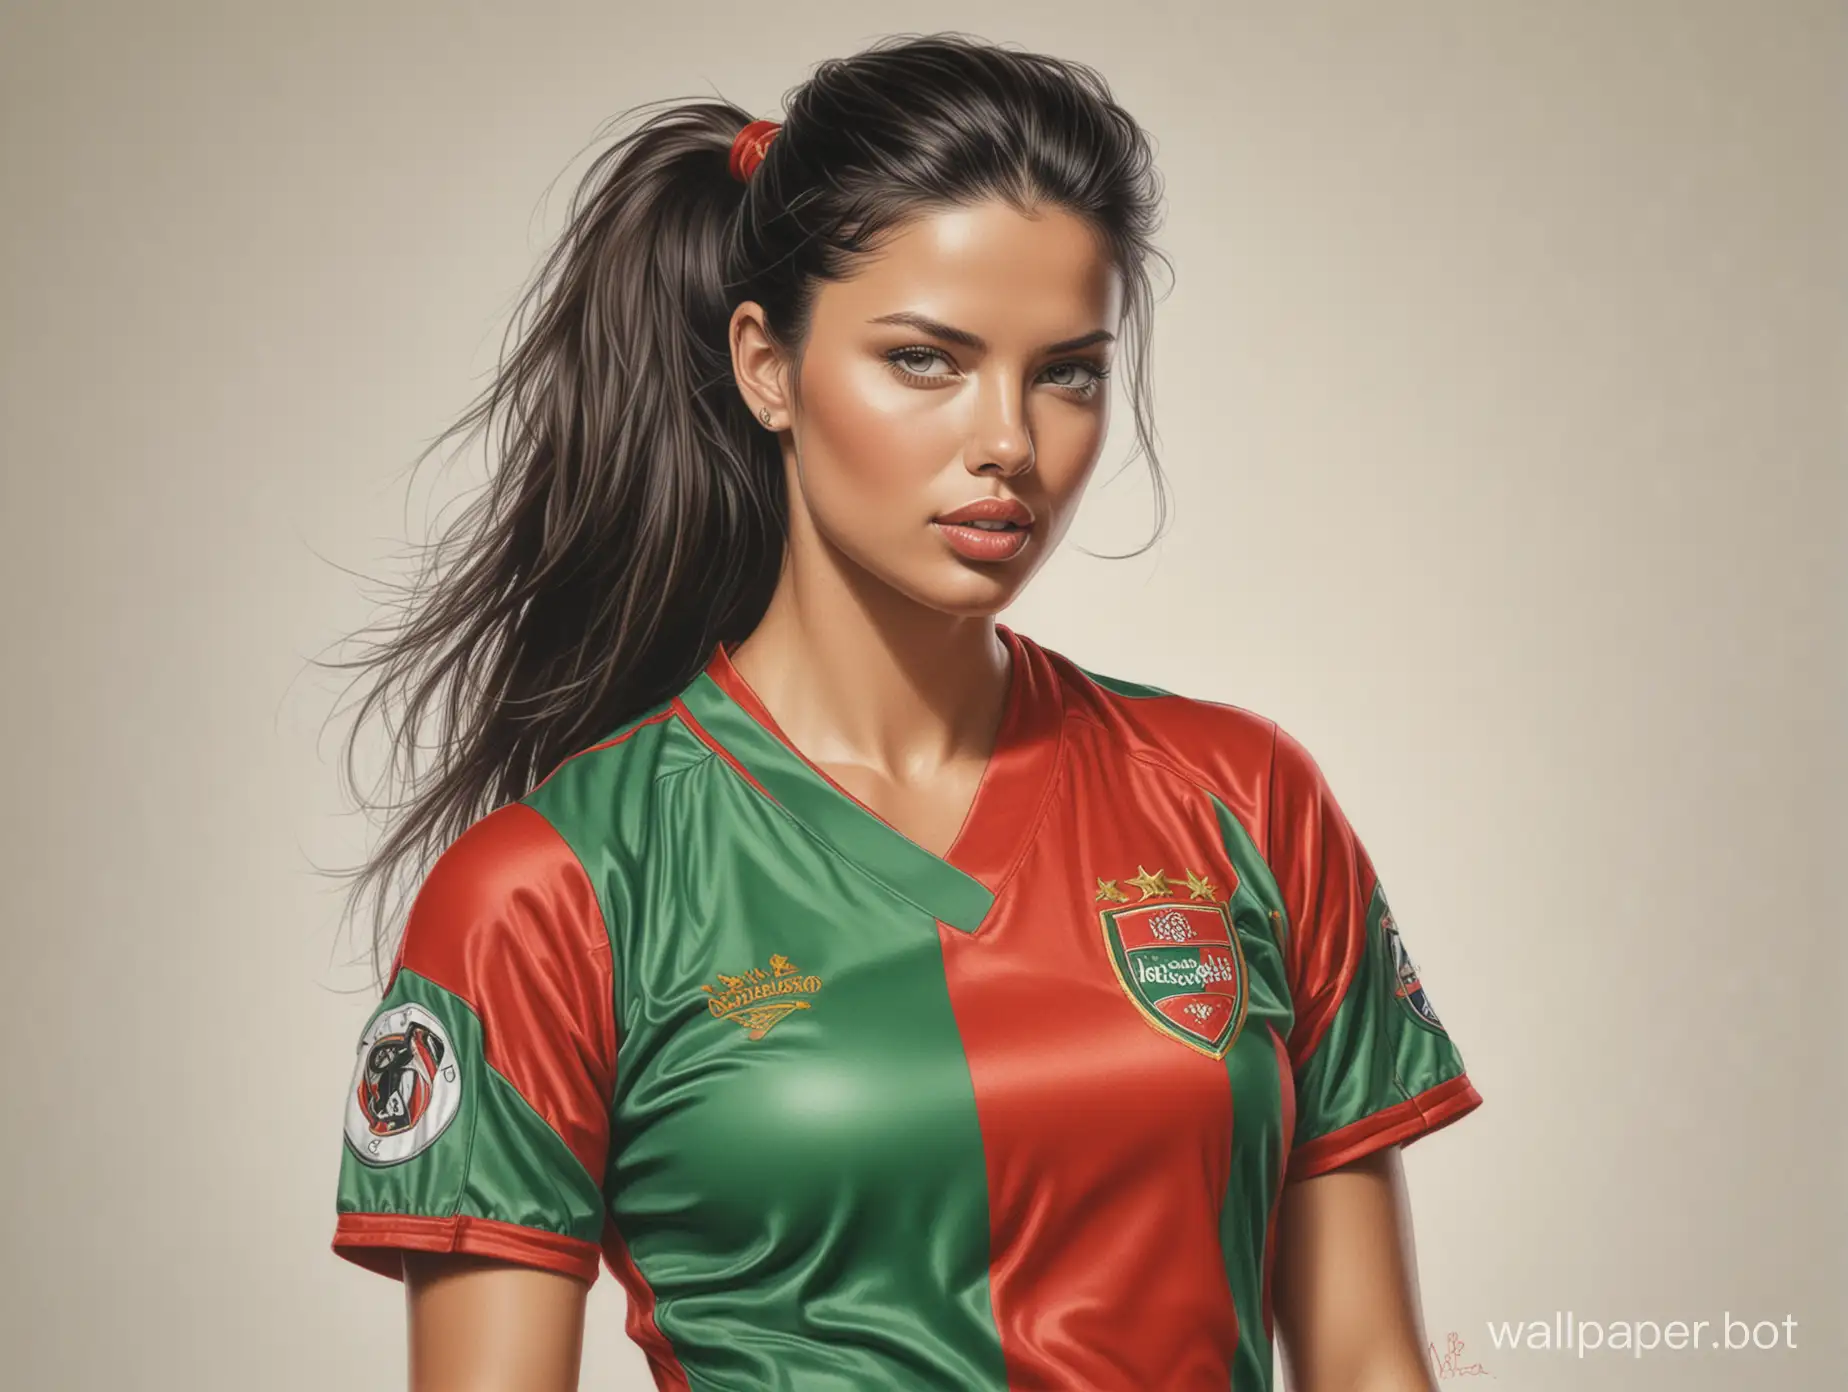 Realistic-Portrait-Drawing-of-Adriana-Lima-in-GreenRed-Soccer-Uniform